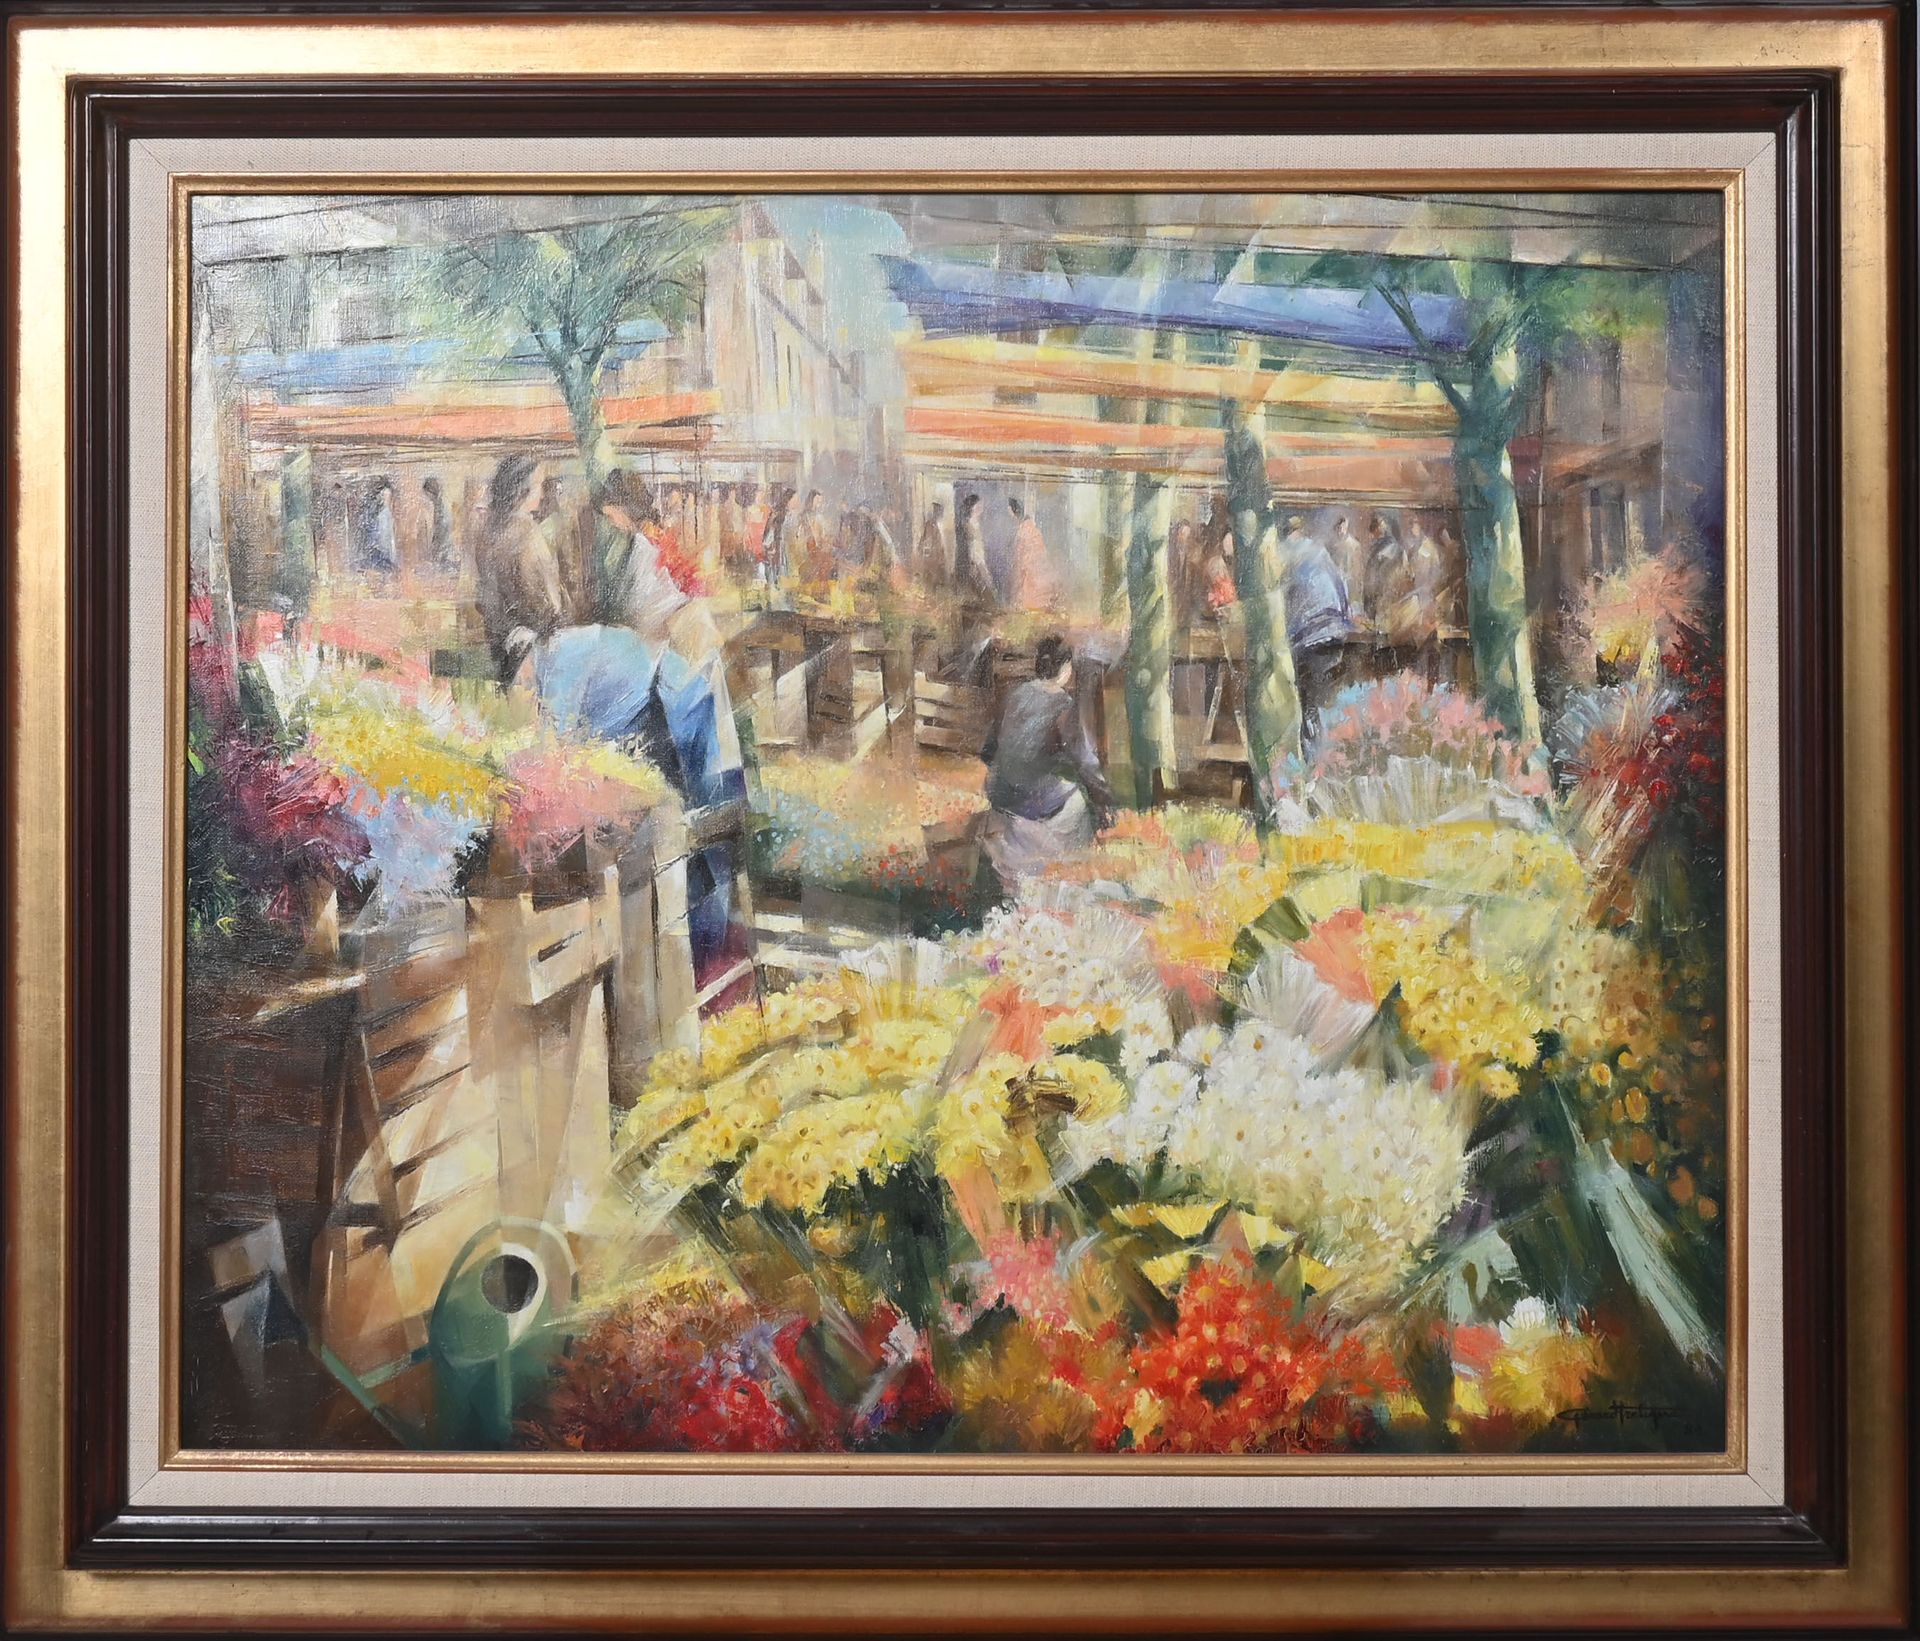 Null 热拉尔-弗莱迪内(Gérard FRETIGNE) (1928-2005)
花市 - 1989年
布面油画 
右下角有签名和日期89
60 x 73 &hellip;